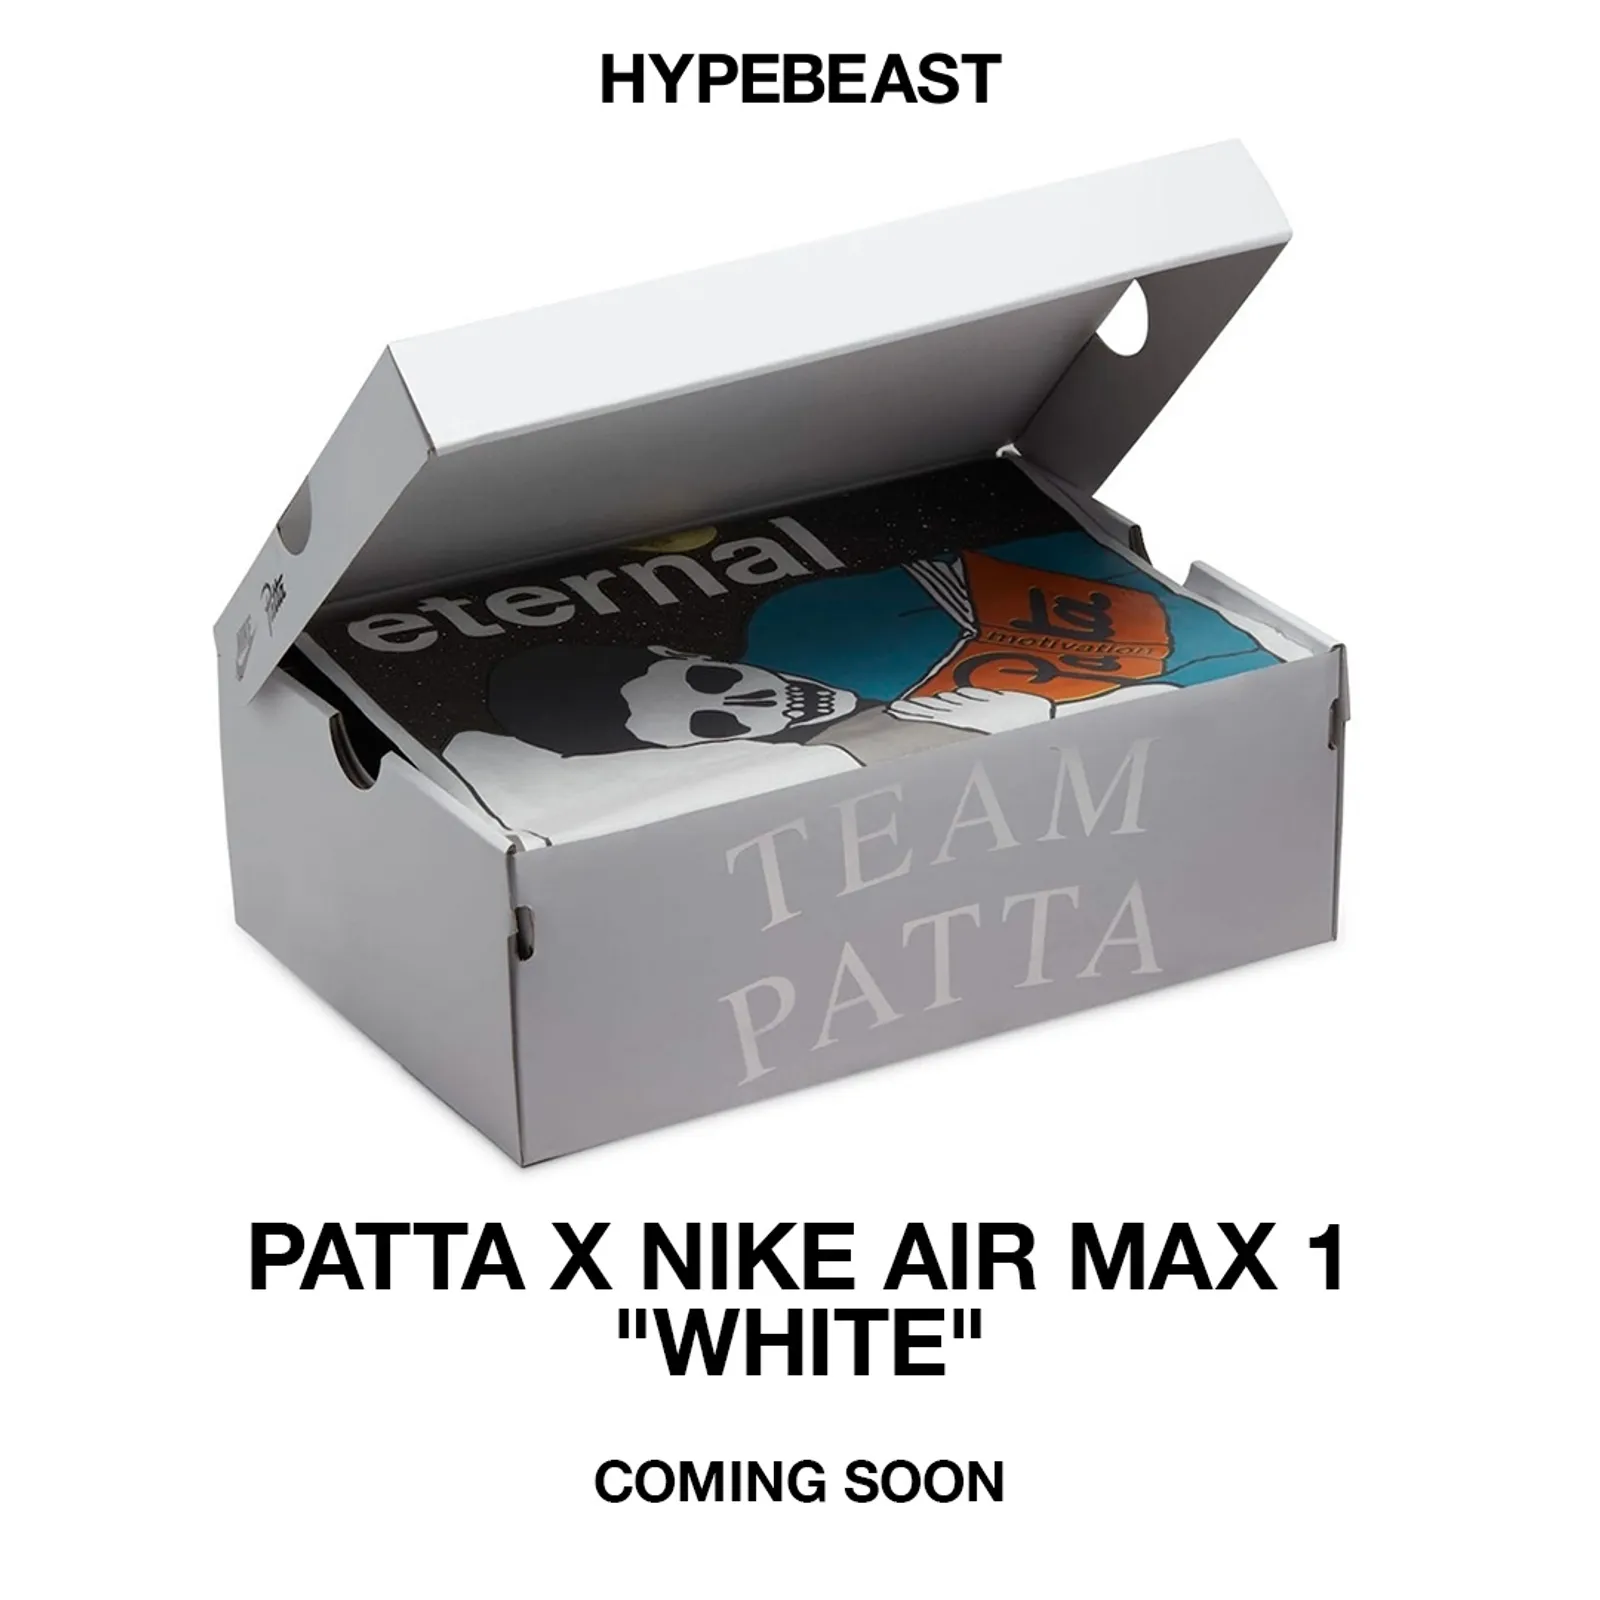 Siluet Unik pada Koleksi Sneaker Patta x Nike Air Max 1 'White'